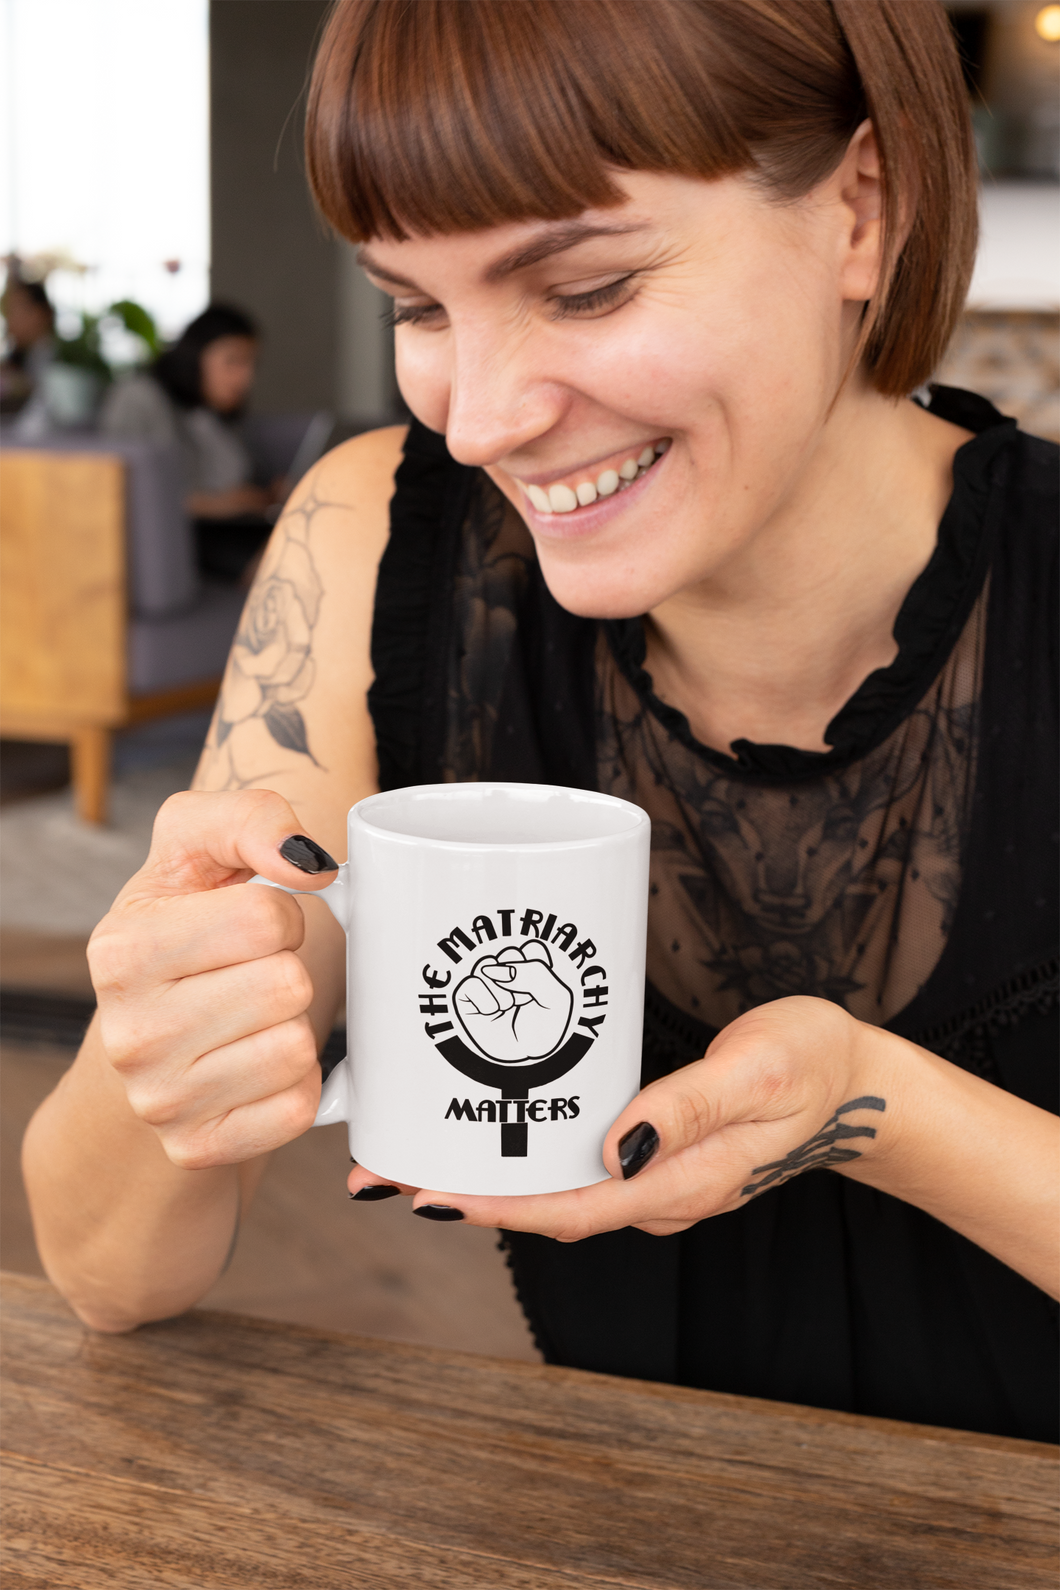 🌹 The Matriarchy Matters™ 11 or 15 oz. Coffee Mug